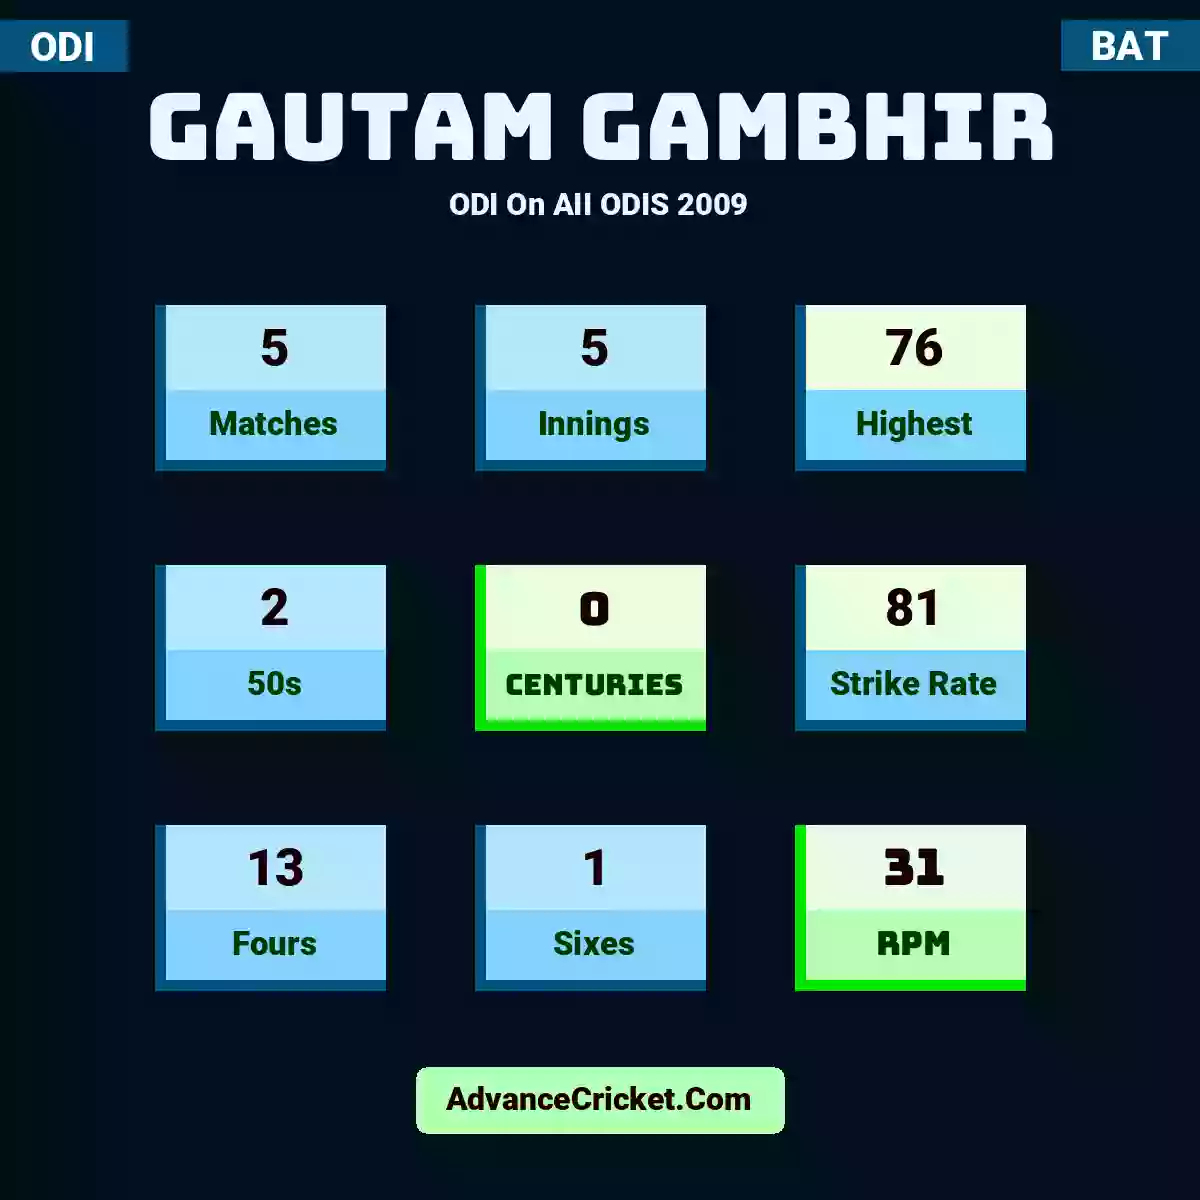 Gautam Gambhir ODI  On AII ODIS 2009, Gautam Gambhir played 5 matches, scored 76 runs as highest, 2 half-centuries, and 0 centuries, with a strike rate of 81. G.Gambhir hit 13 fours and 1 sixes, with an RPM of 31.